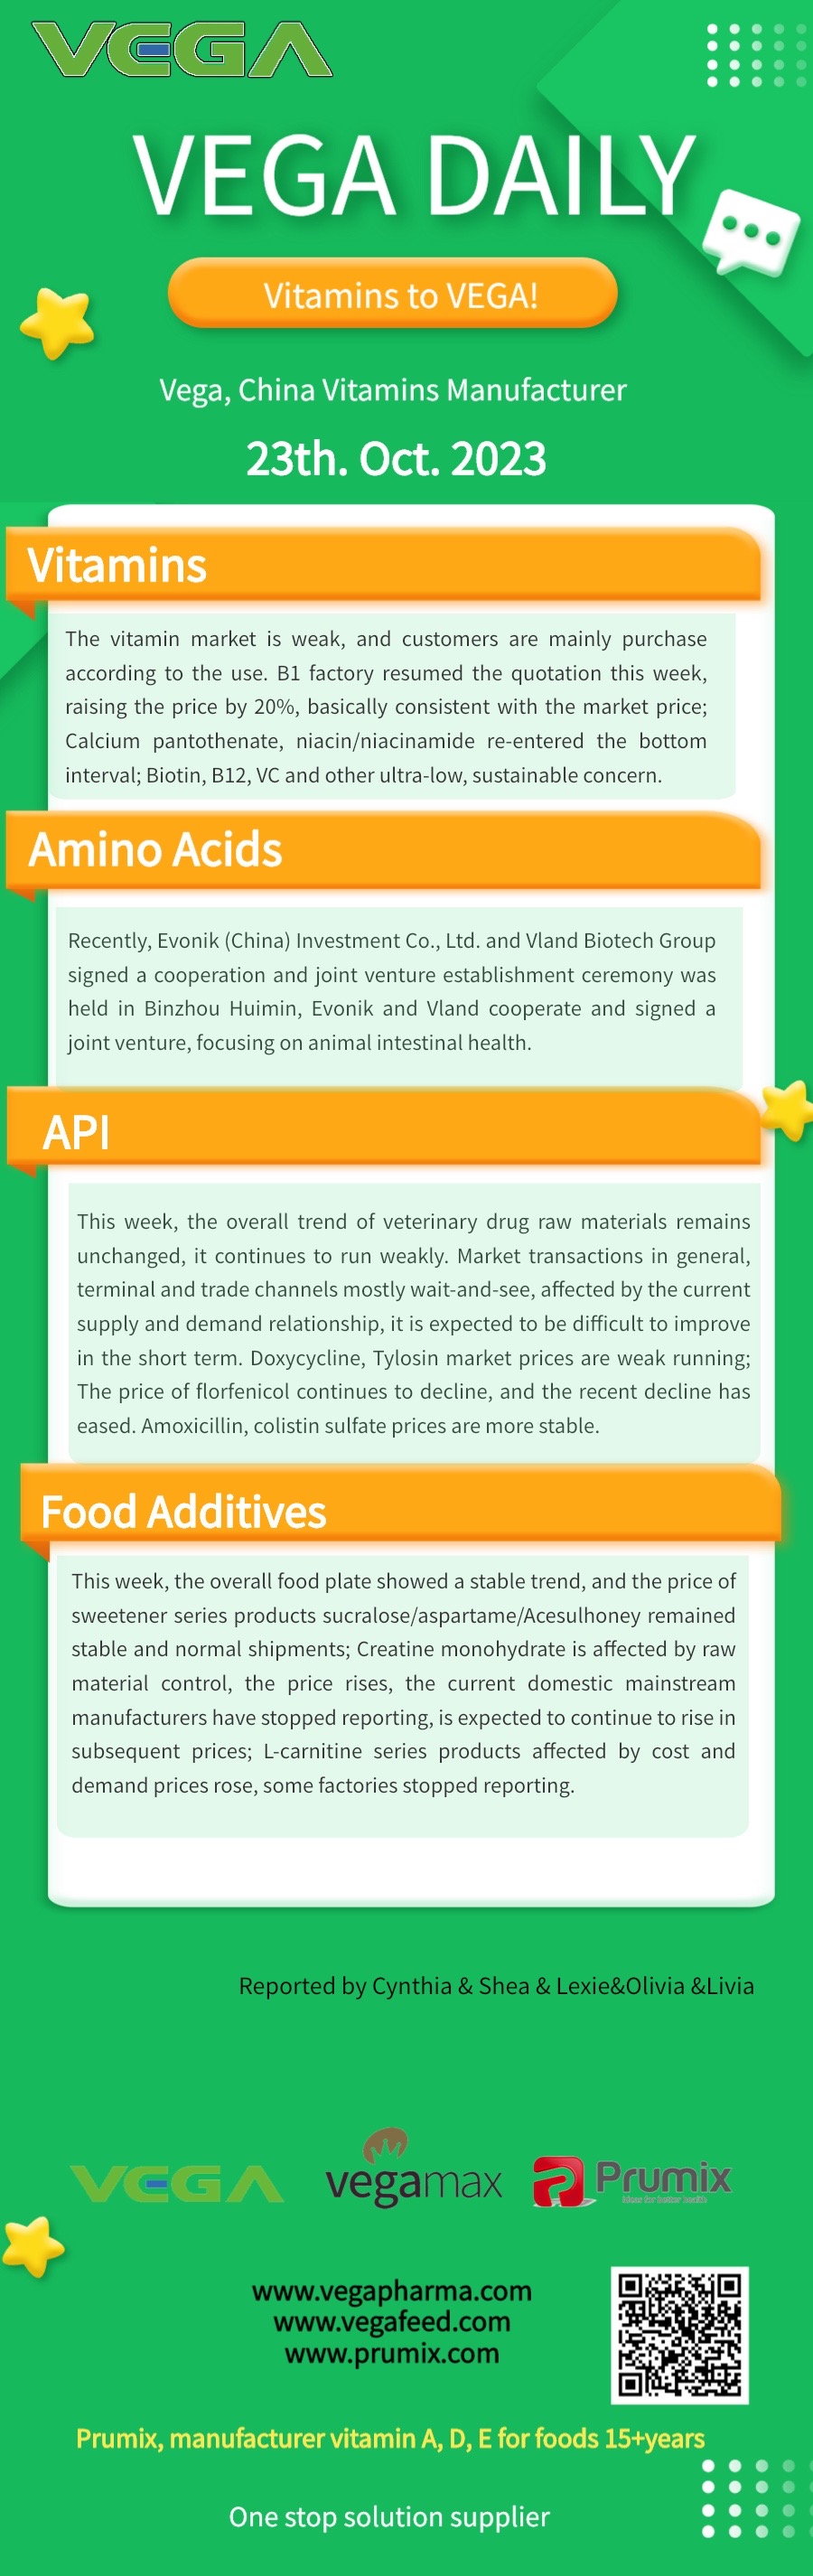 Vega Daily Dated on Oct 23rd 2023 Vitamins Amino Acids API Food Additives.jpg